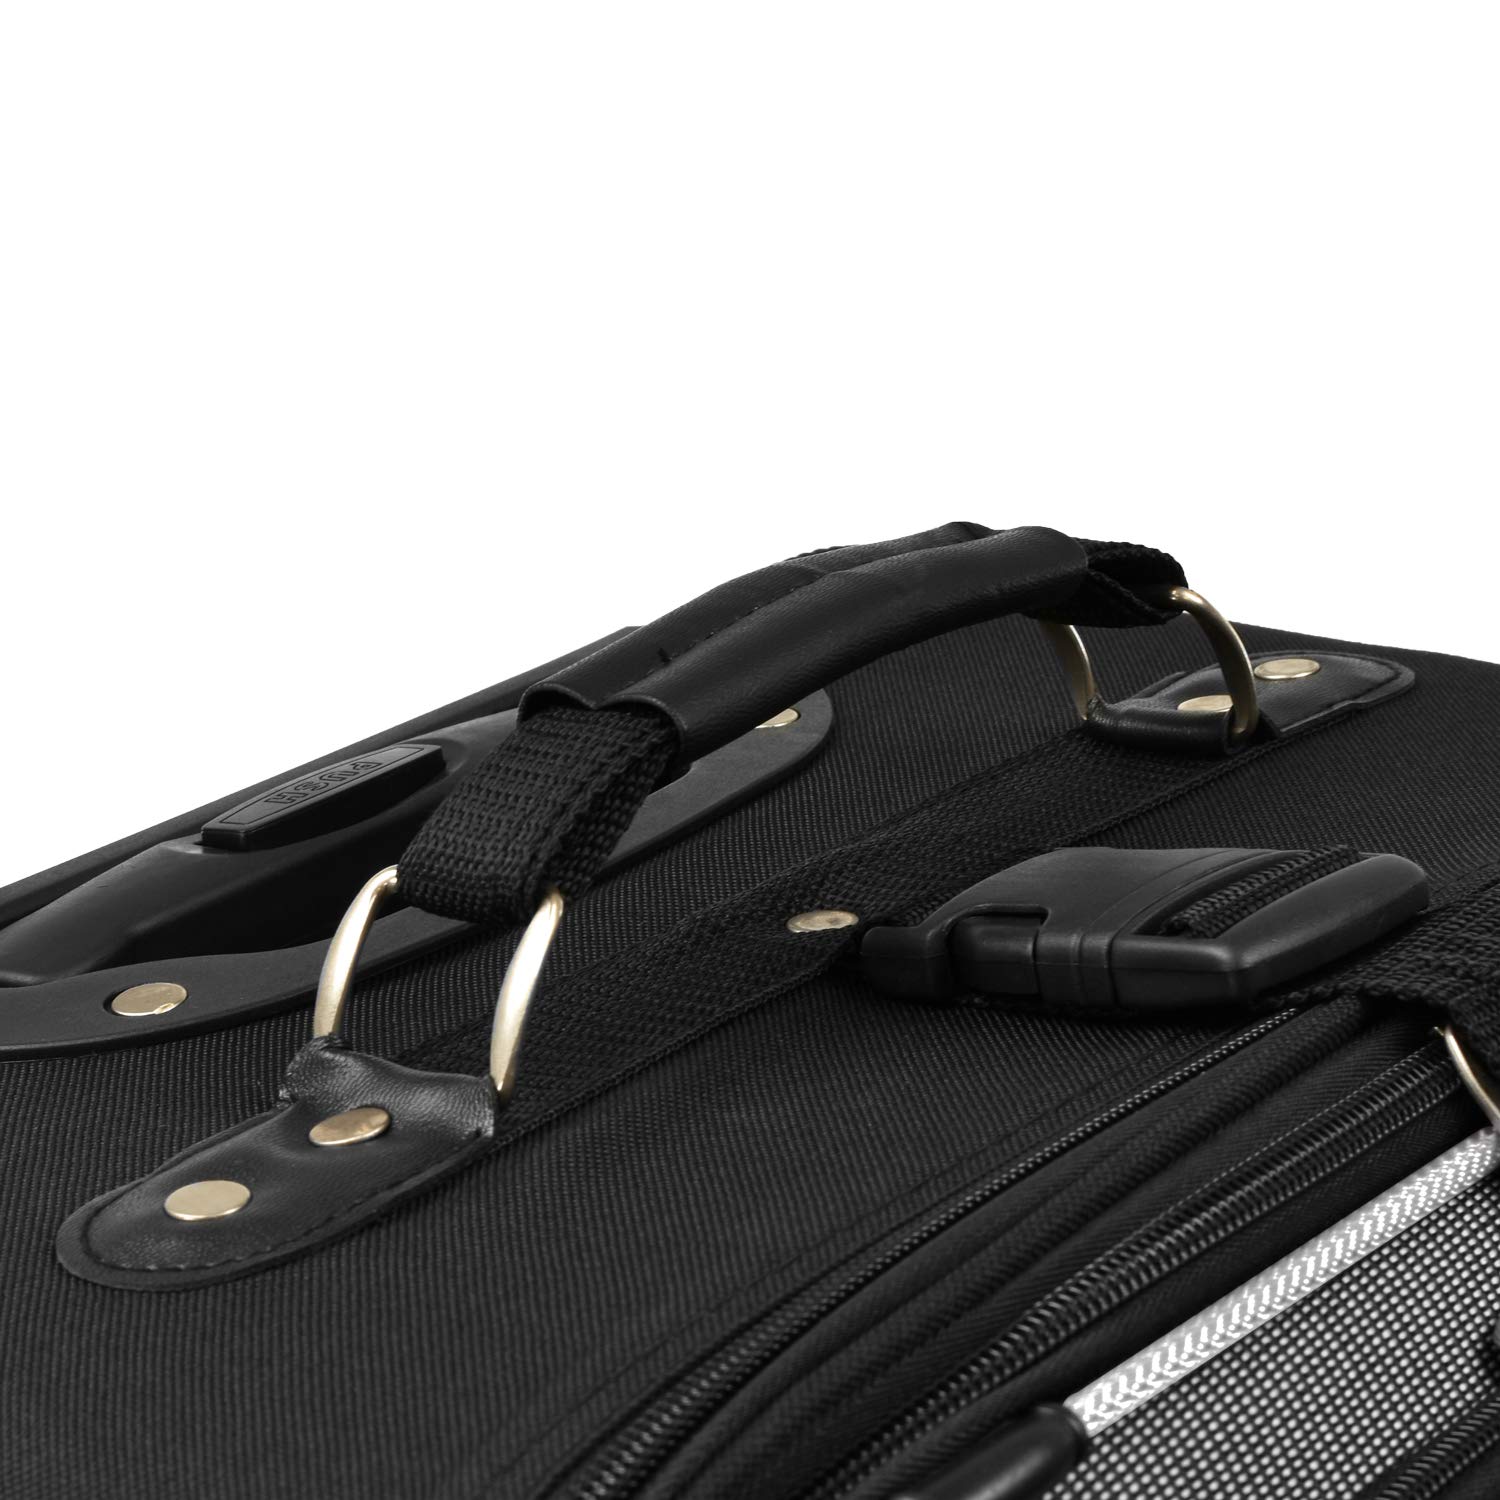 U.S. Traveler New Yorker Lightweight Softside Expandable Travel Rolling Luggage Set, Gray, 4-Piece (15/21/25/29)